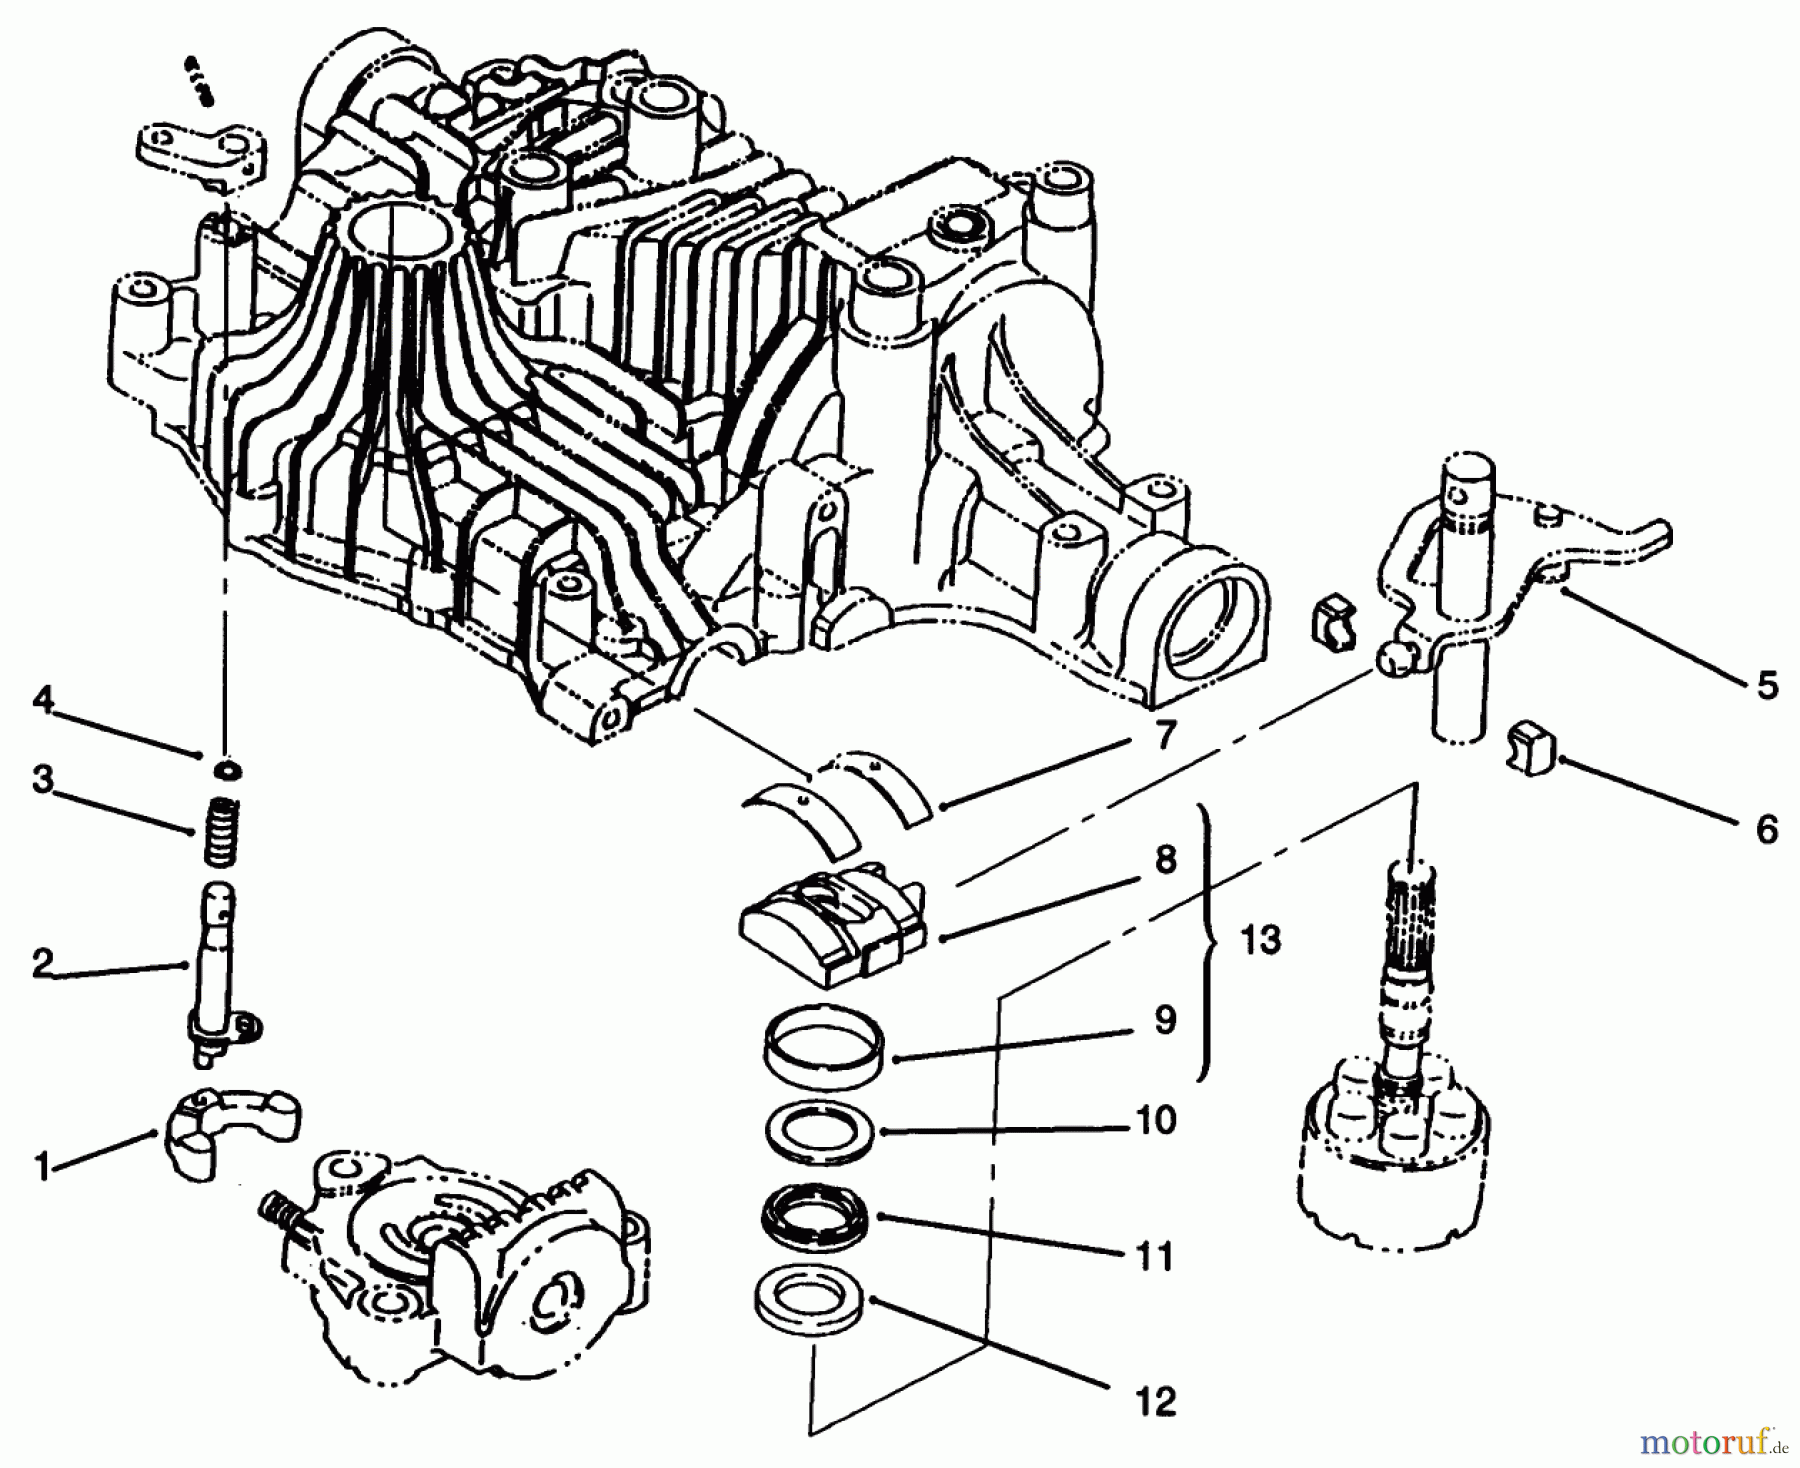  Toro Neu Mowers, Lawn & Garden Tractor Seite 1 72102 (269-H) - Toro 269-H Lawn and Garden Tractor, 1996 (6900001-6999999) RANGE SHIFT